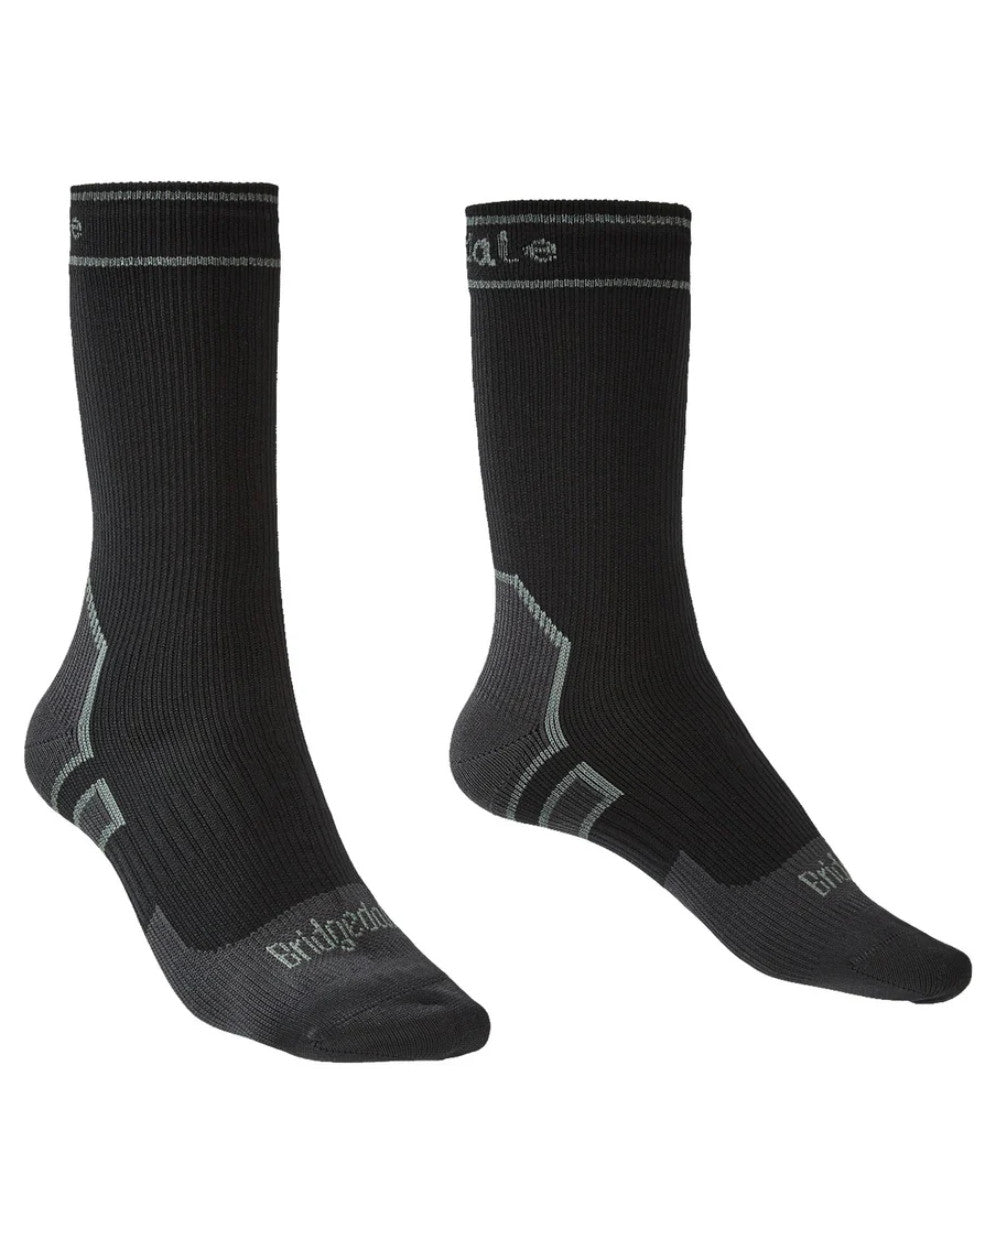 Black Coloured Bridgedale StormSock Lightweight Boot Socks On A White Background 